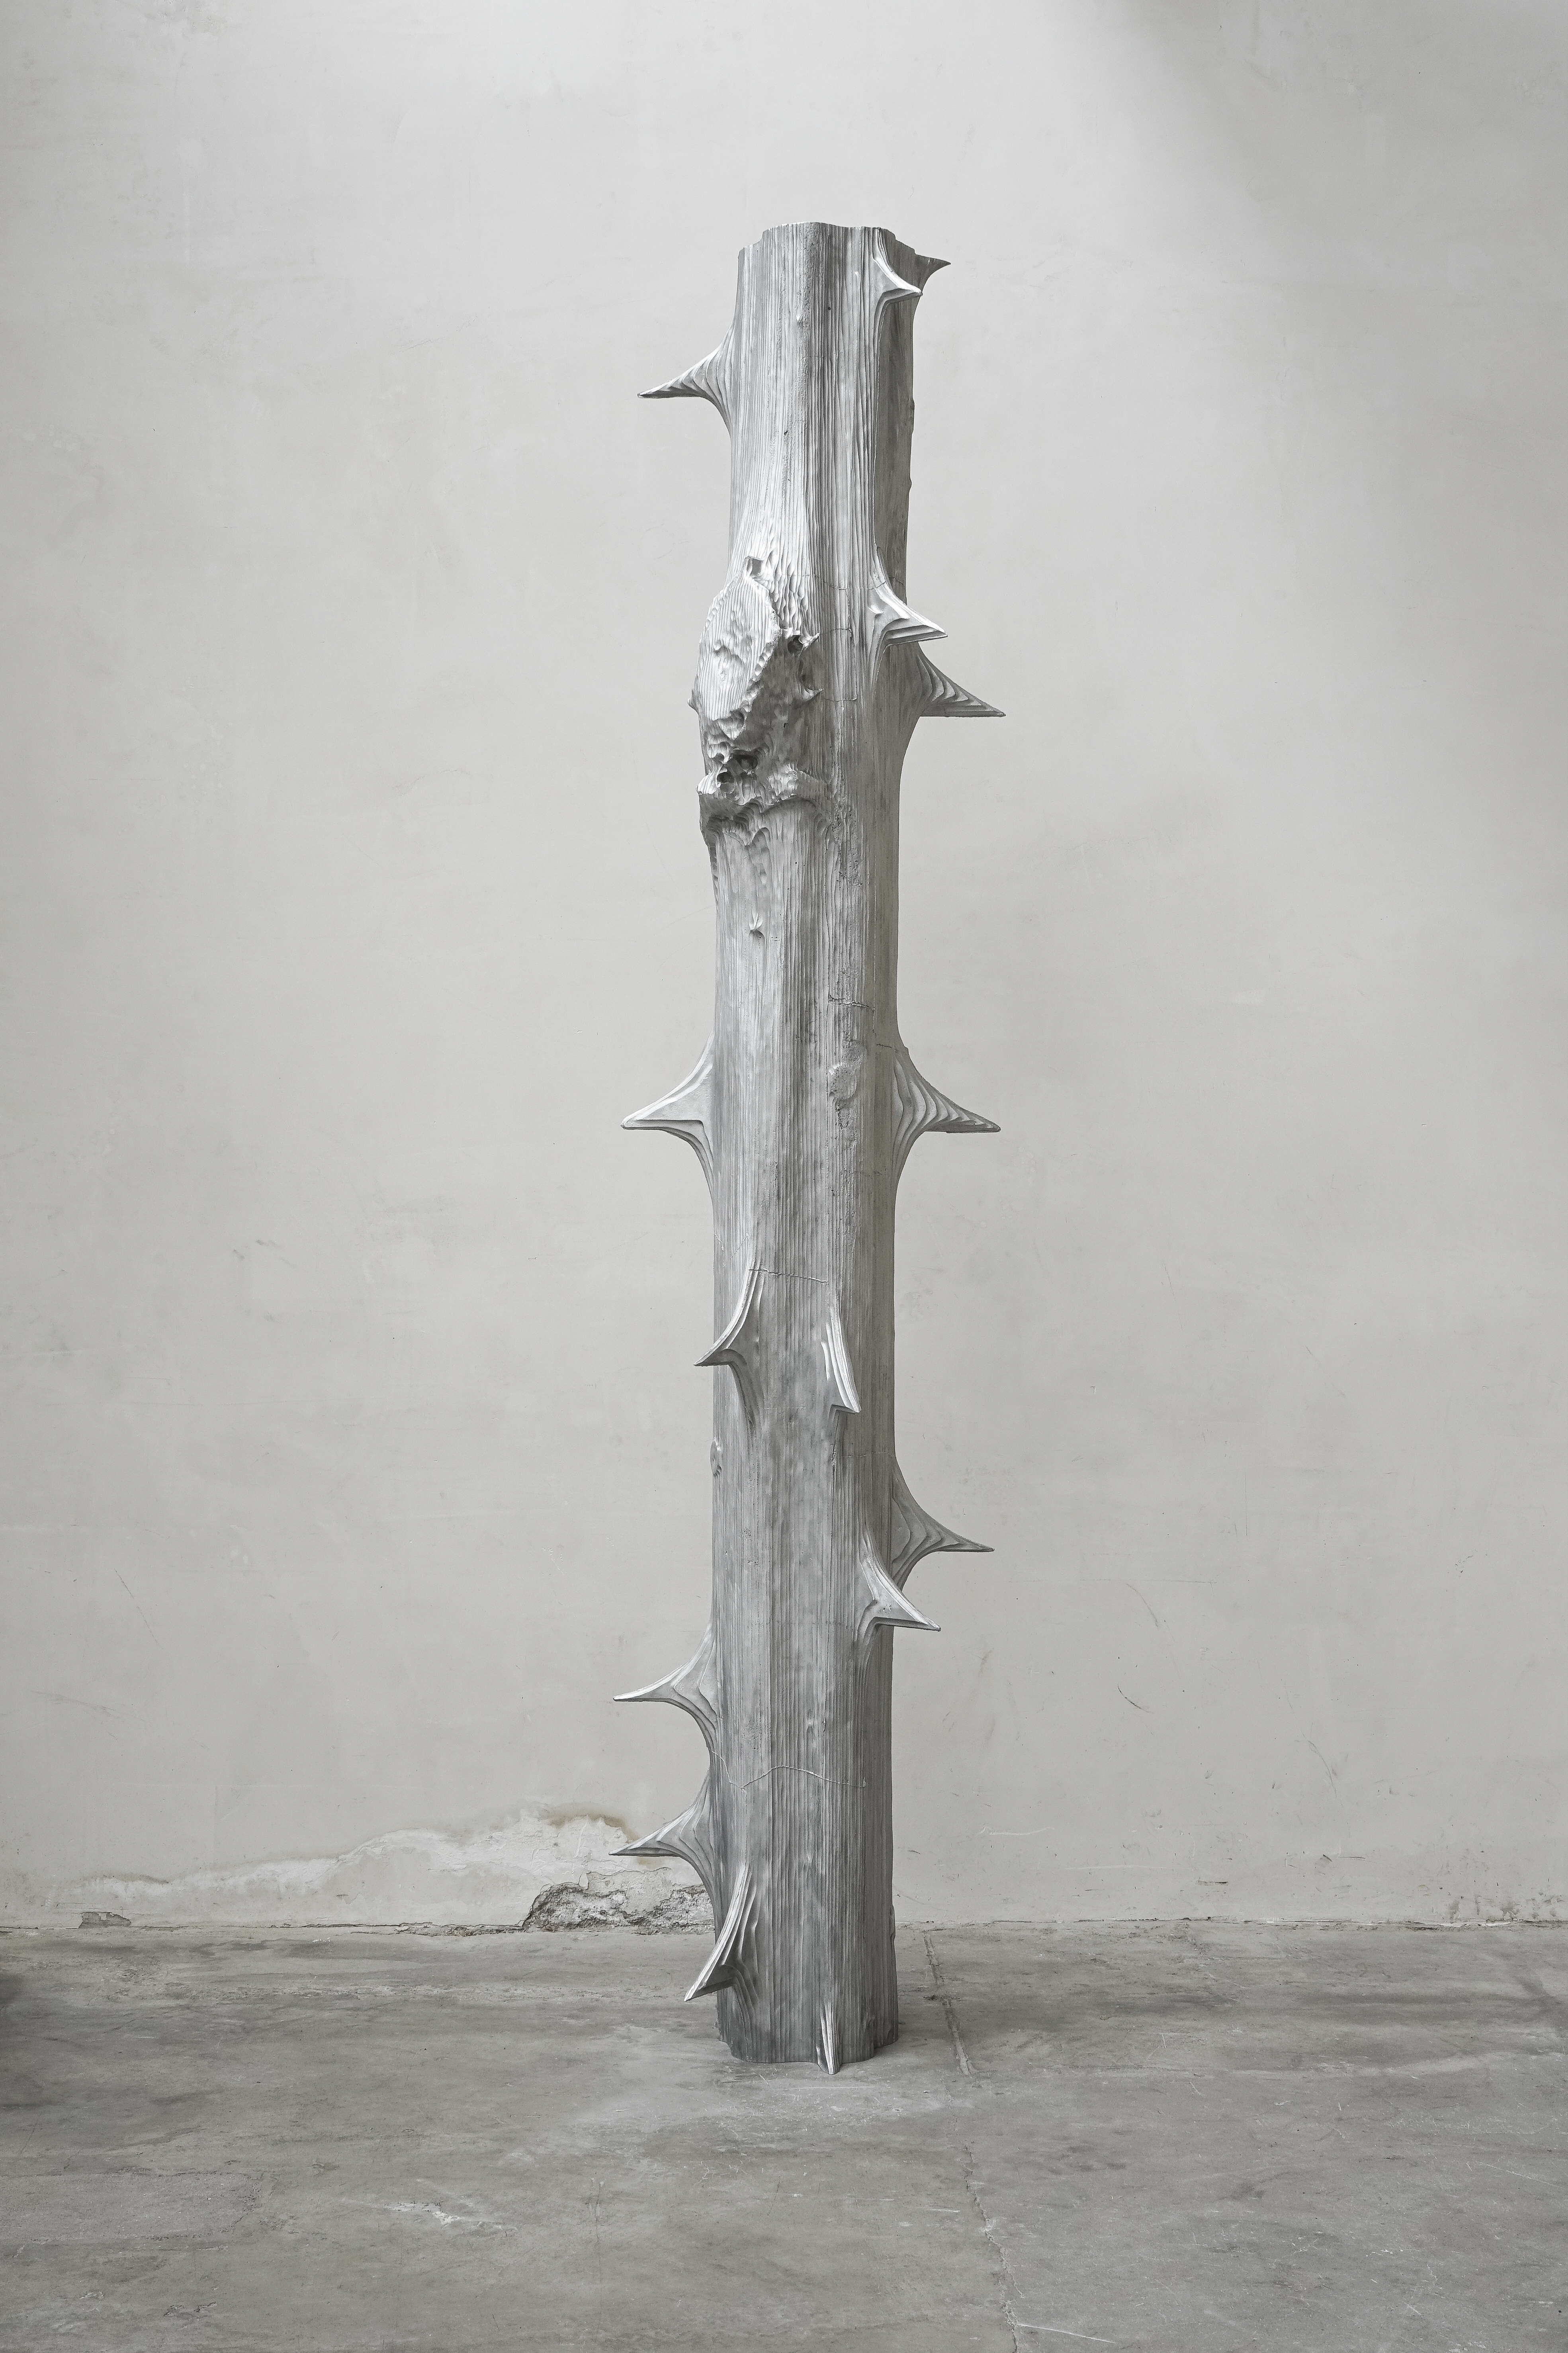 Megaflora, 2021 /
and-cast aluminium / 330 × 72 × 47 cm /

Courtesy the artist and Large Glass, London / Photo: Kunstgiesserei St.Gallen